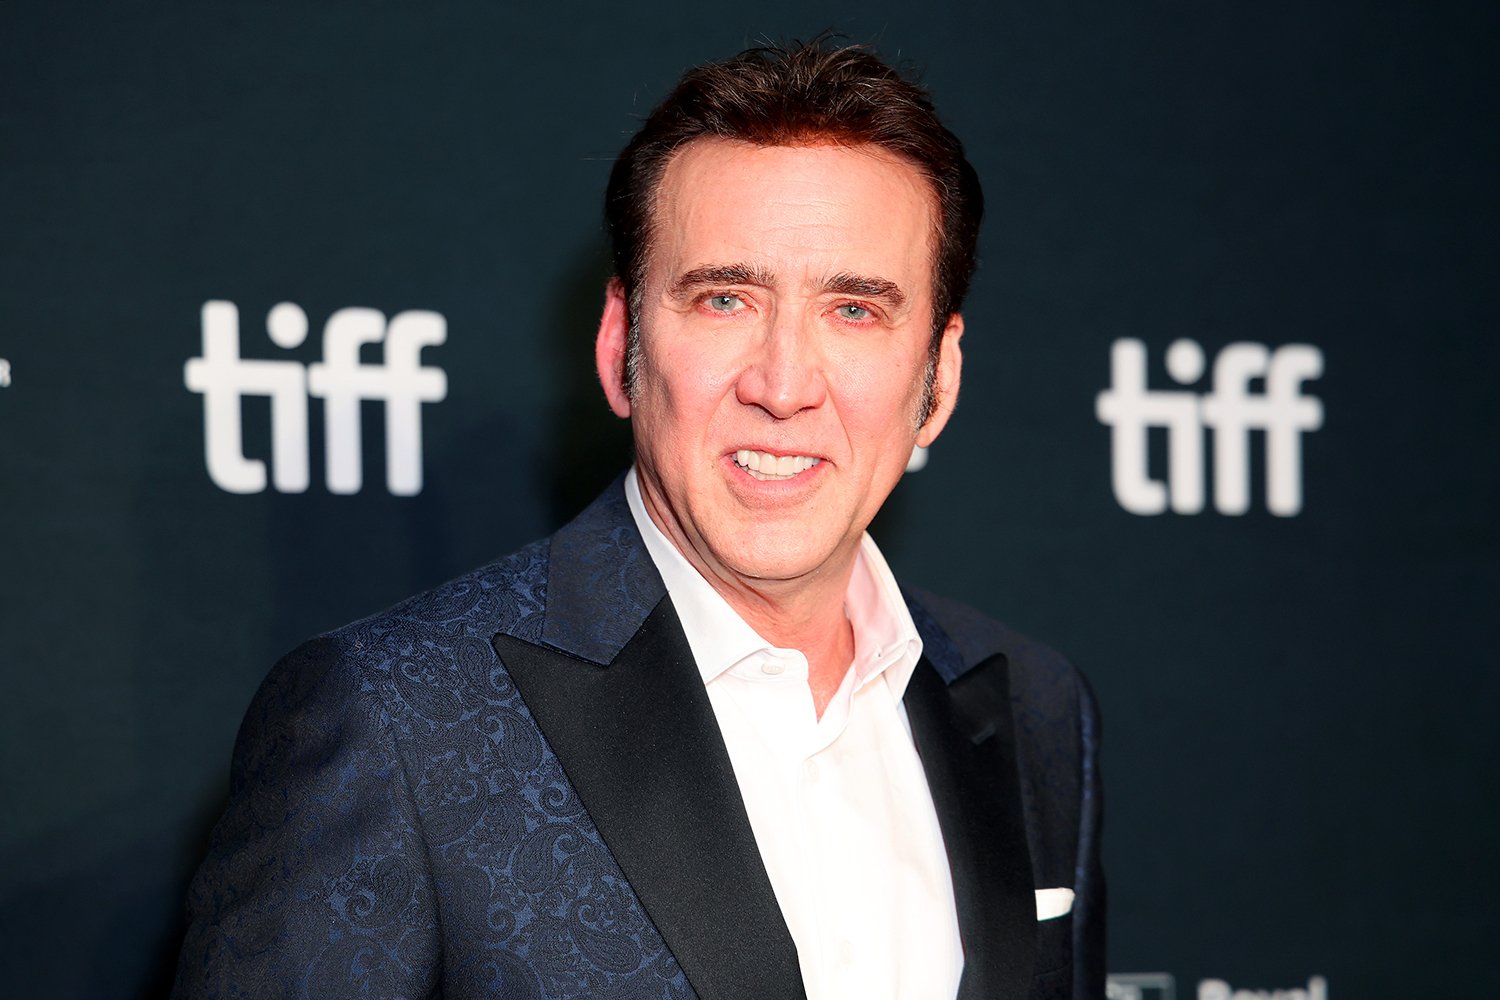 National Treasure star Nicolas Cage smiles in a blue tuxedo at the 2022 Toronto International Film Festival